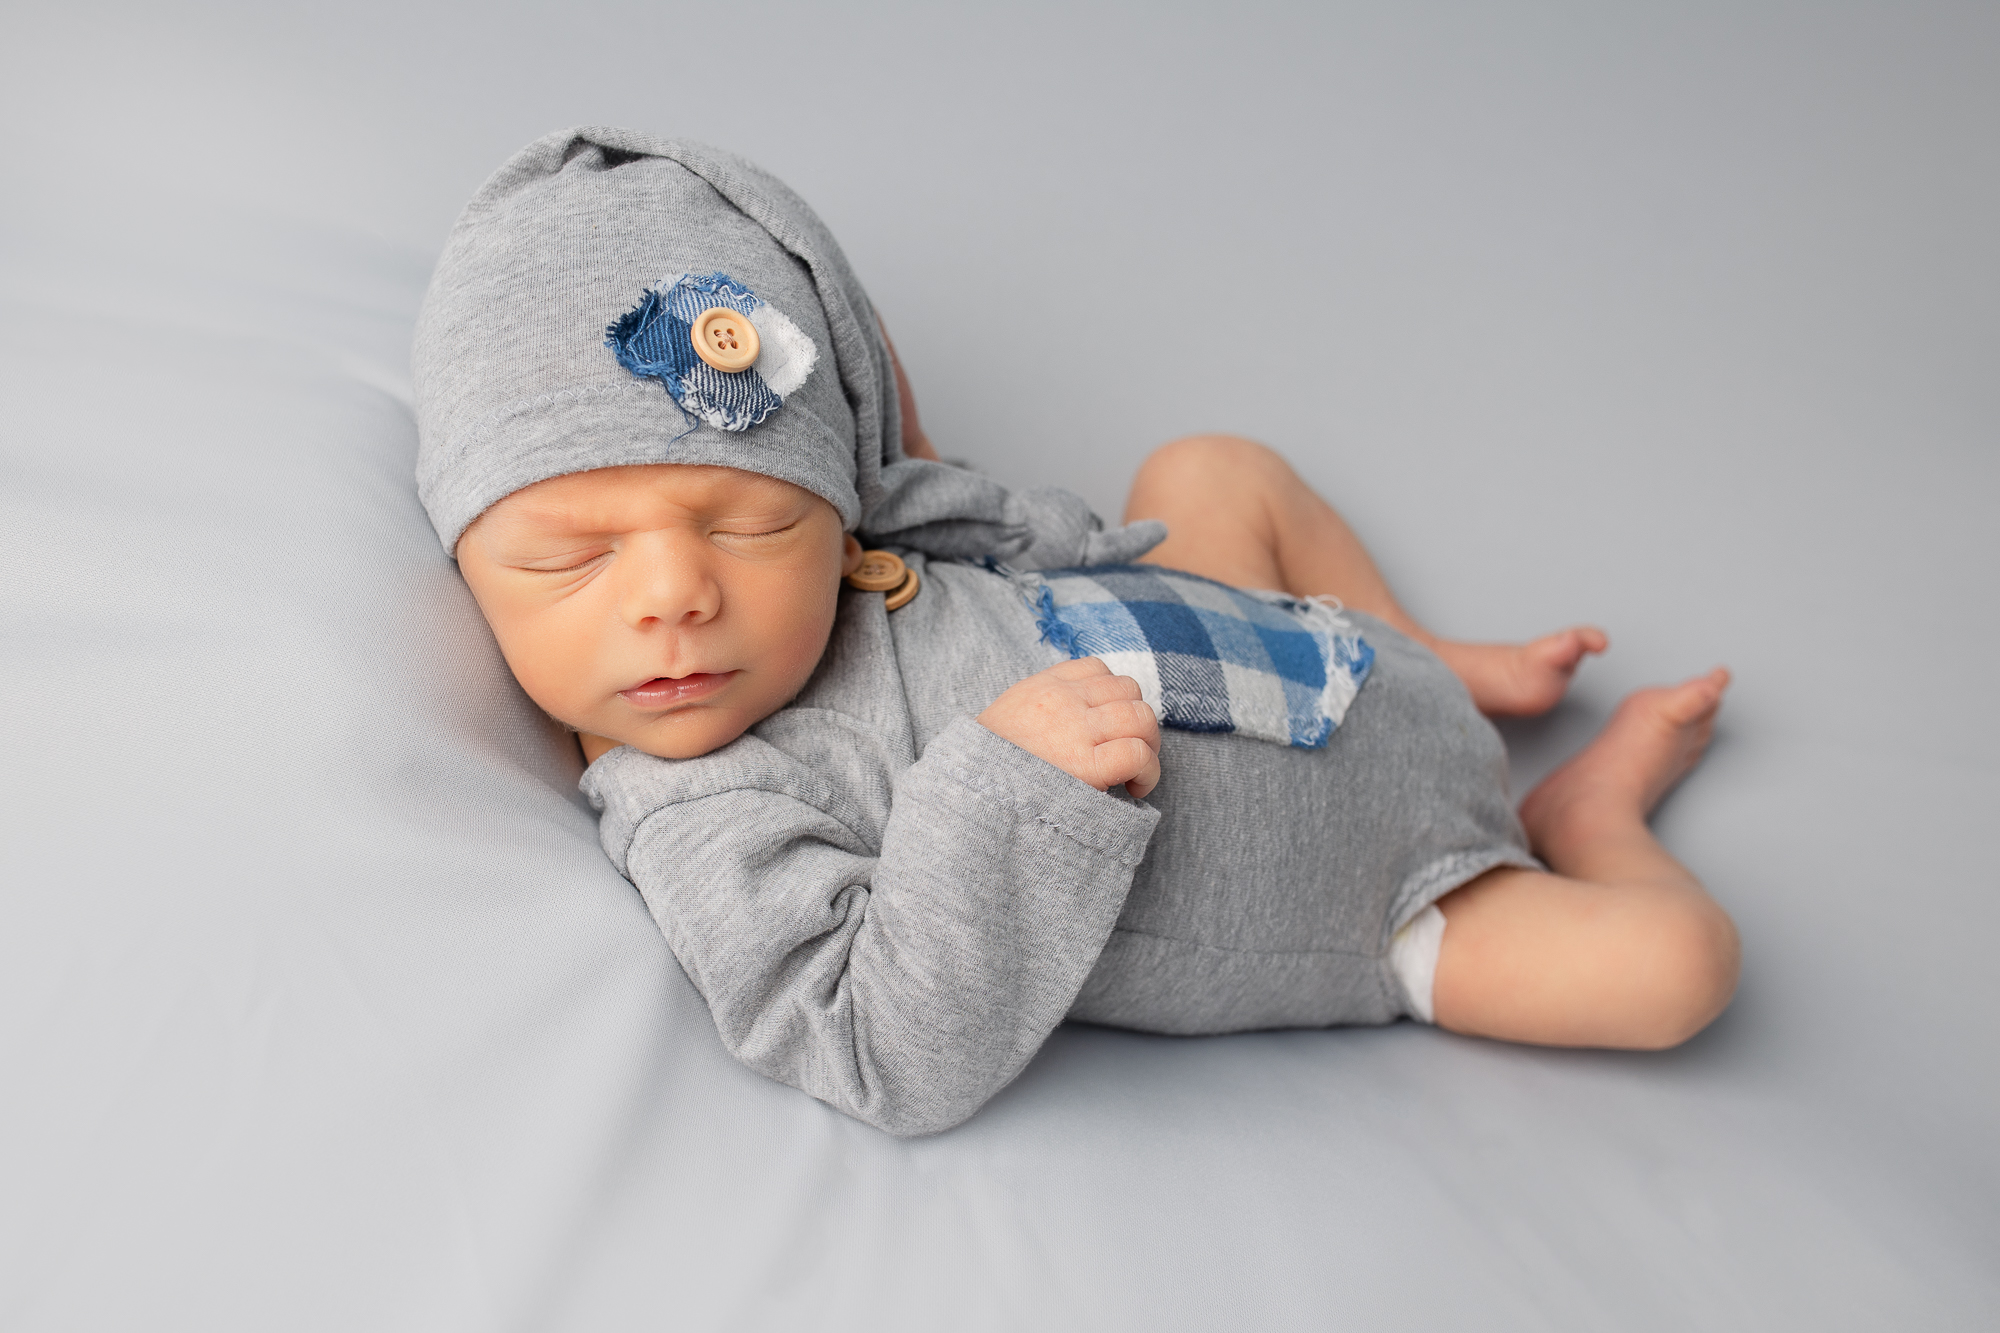 newborn baby boy in cute gray outfit hack Finn pose